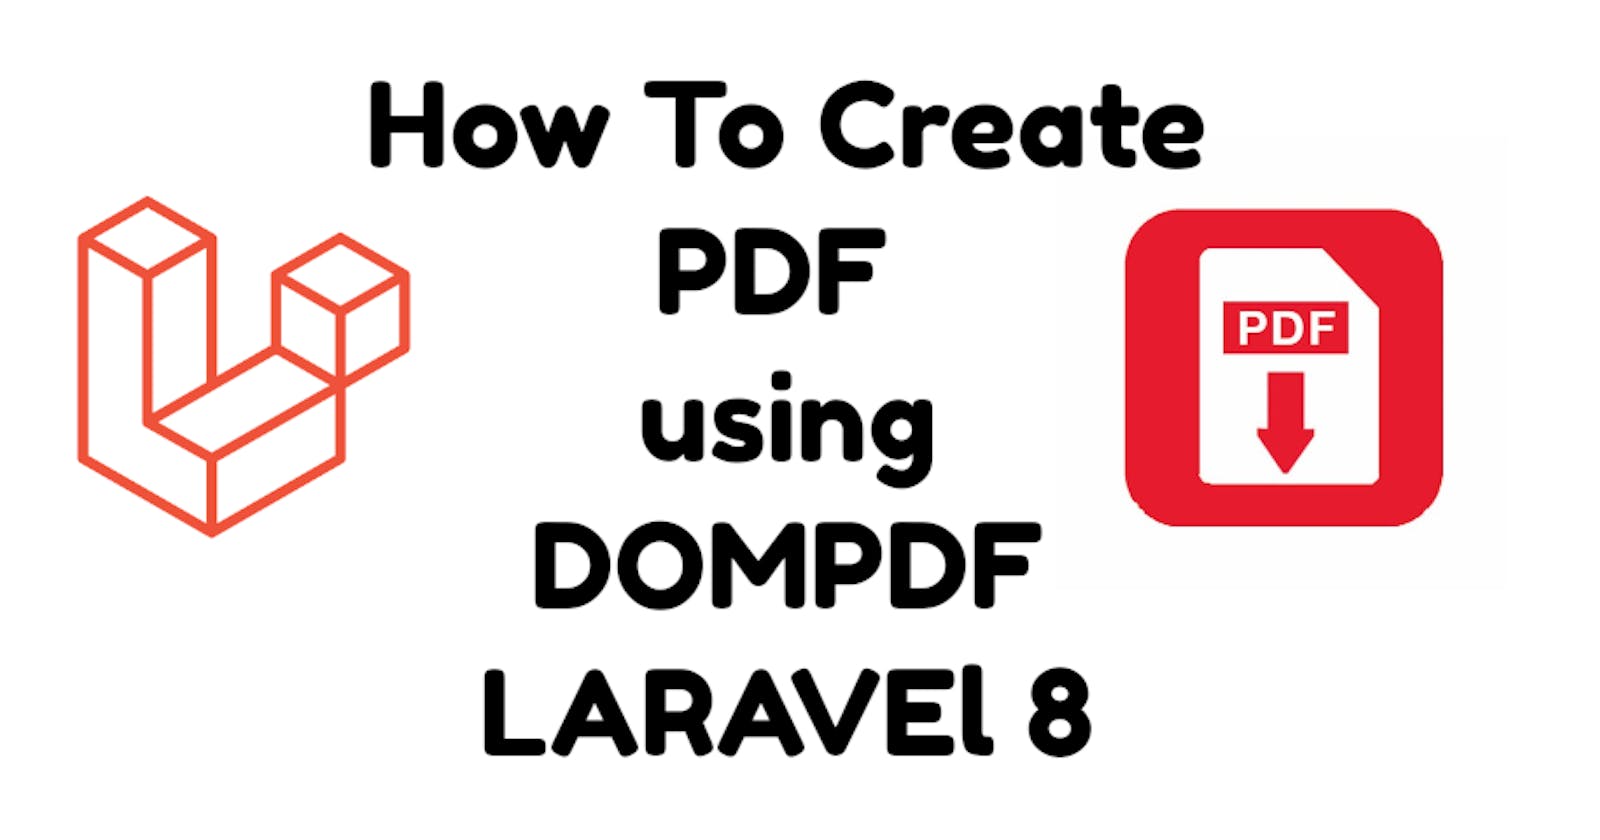 Laravel 8: How To Create PDF using DOMPDF